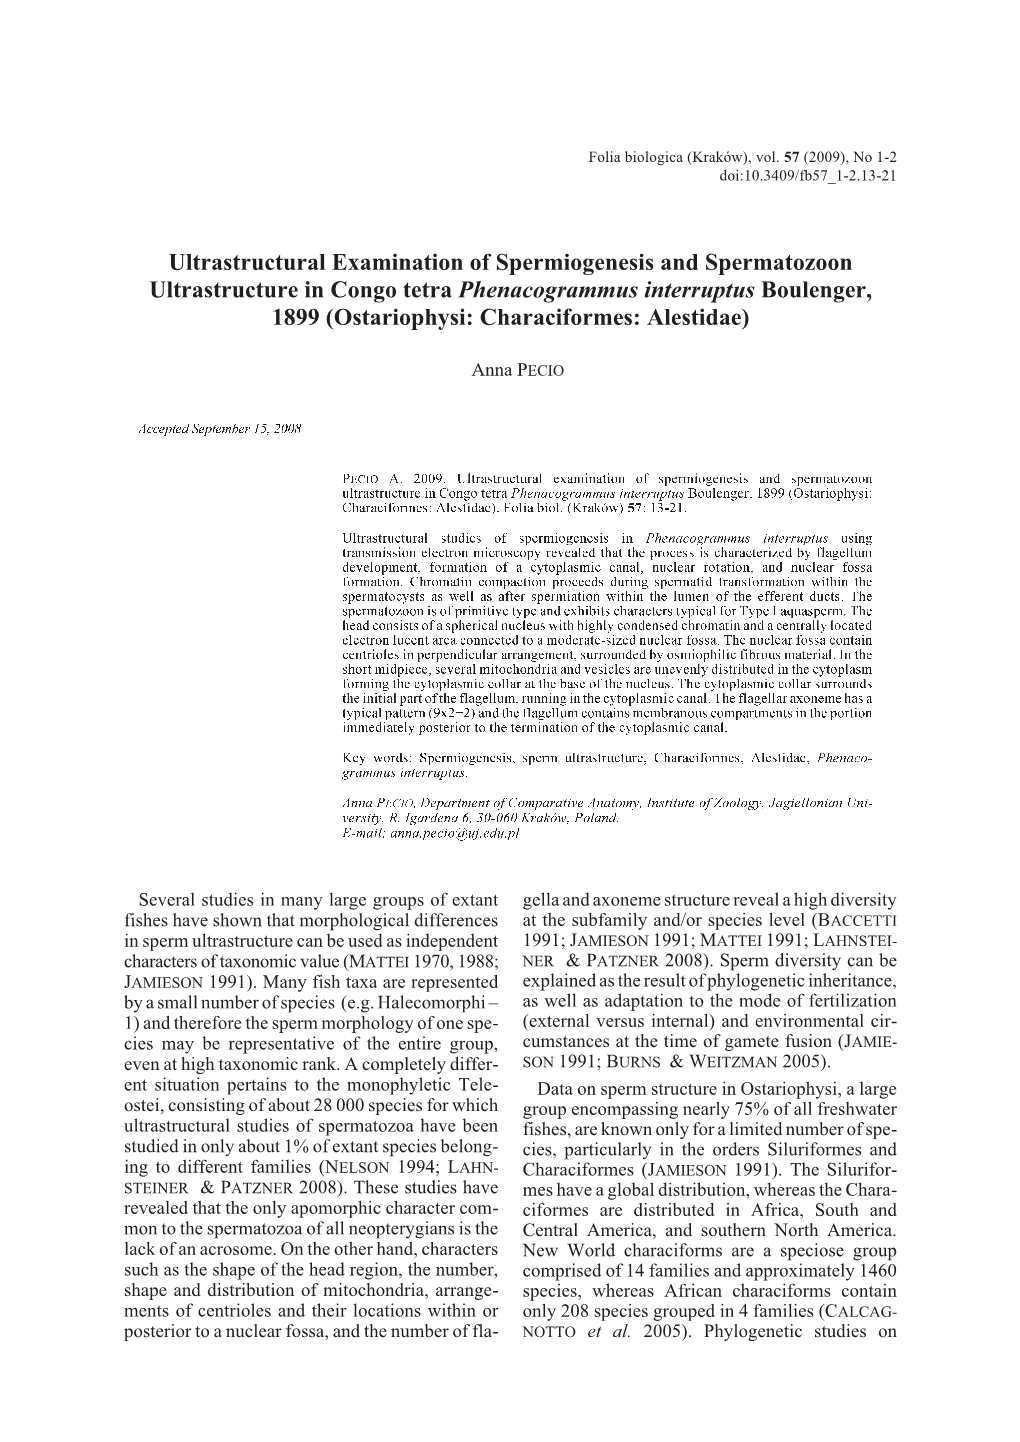 Ultrastructural Examination of Spermiogenesis and Spermatozoon Ultrastructure in Congo Tetr Phenacogrammus Interruptus Boulenger